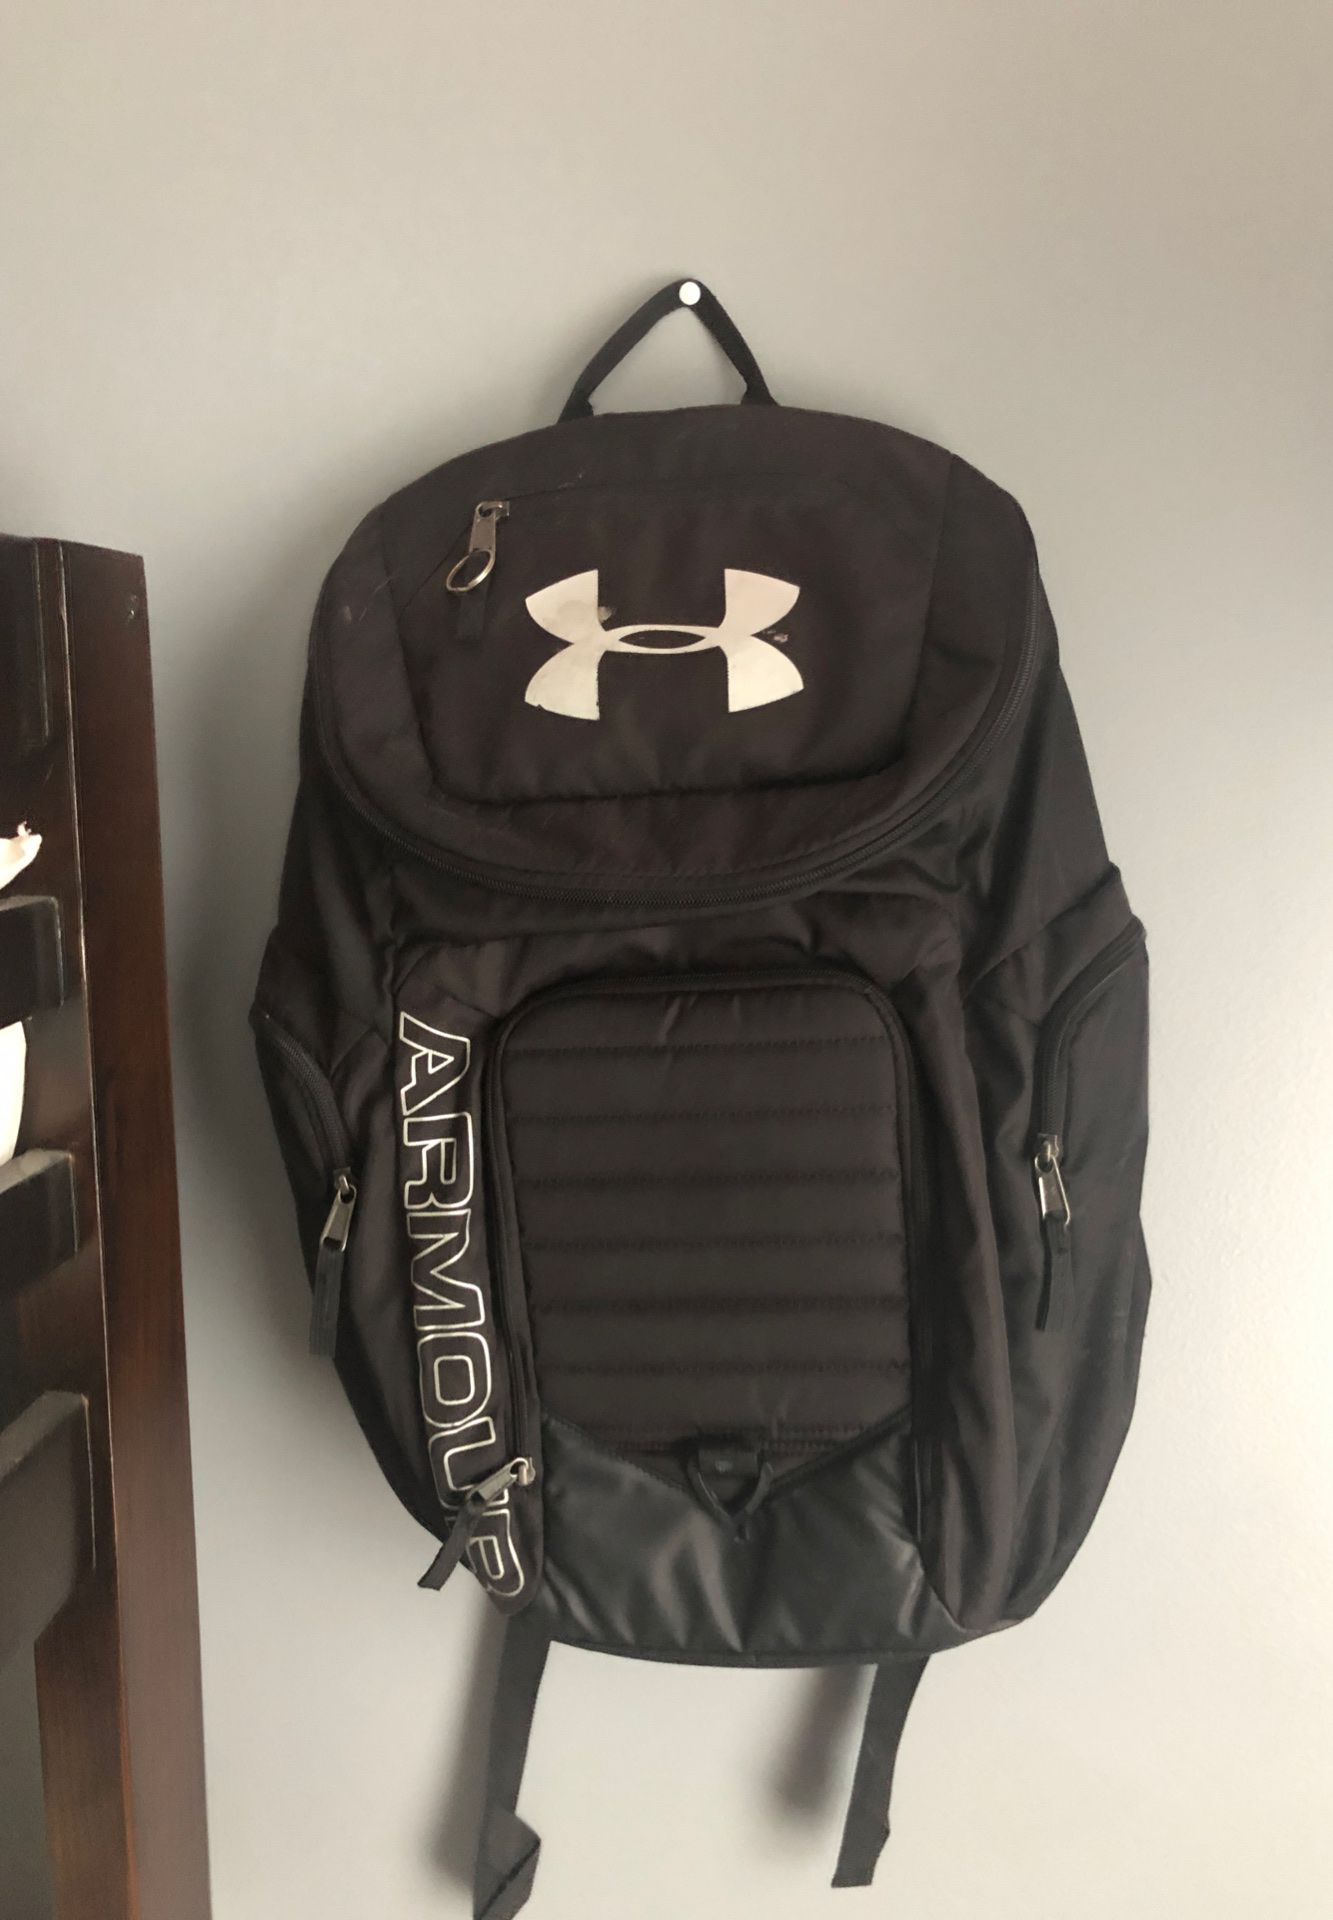 under armor backpack